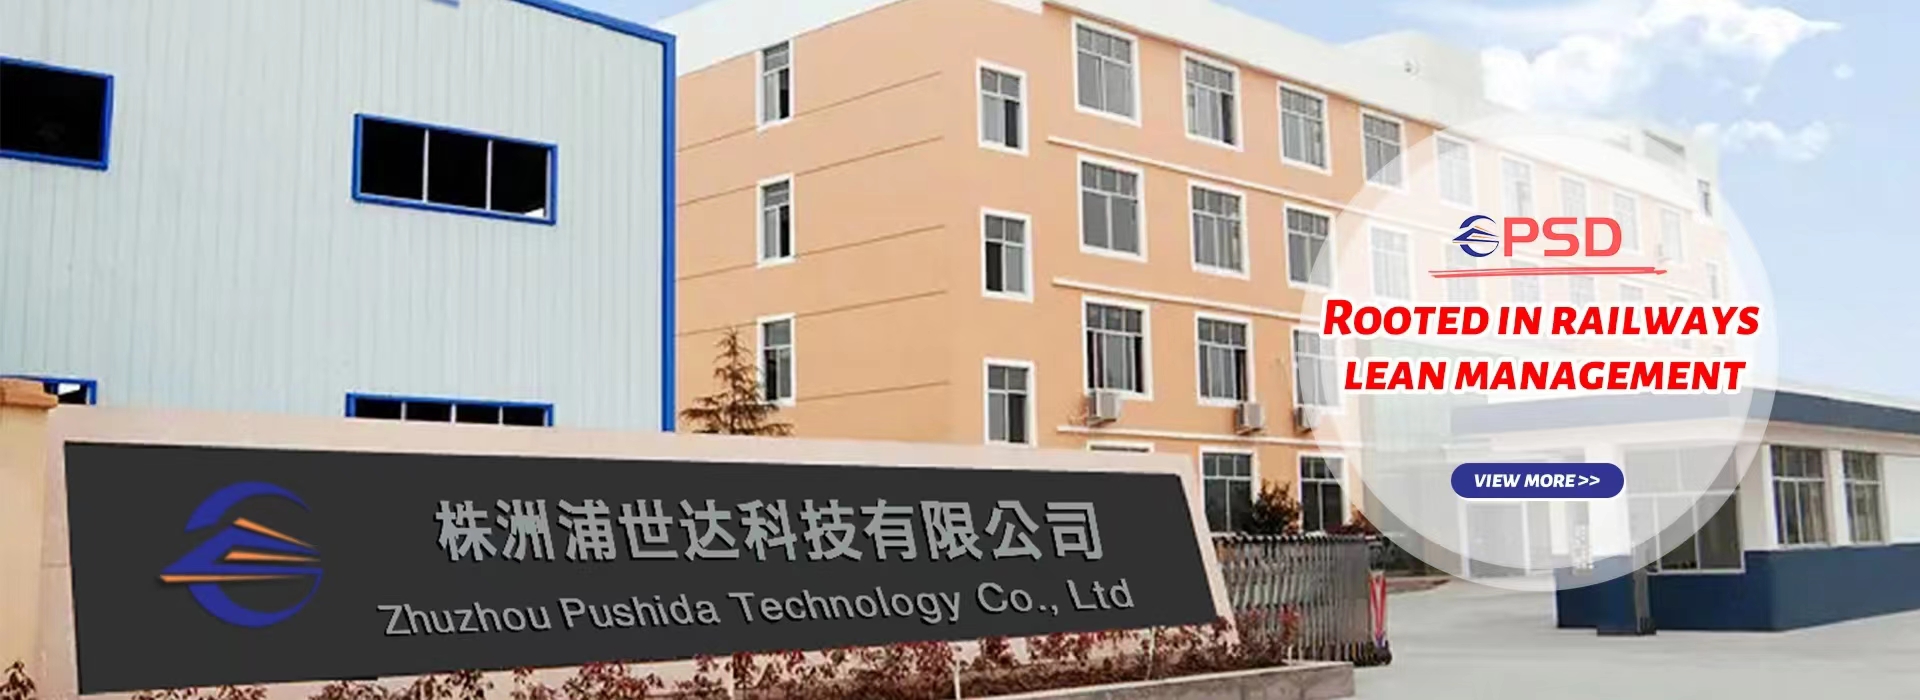 Zhuzhou Pushida Technology Co., Ltd.